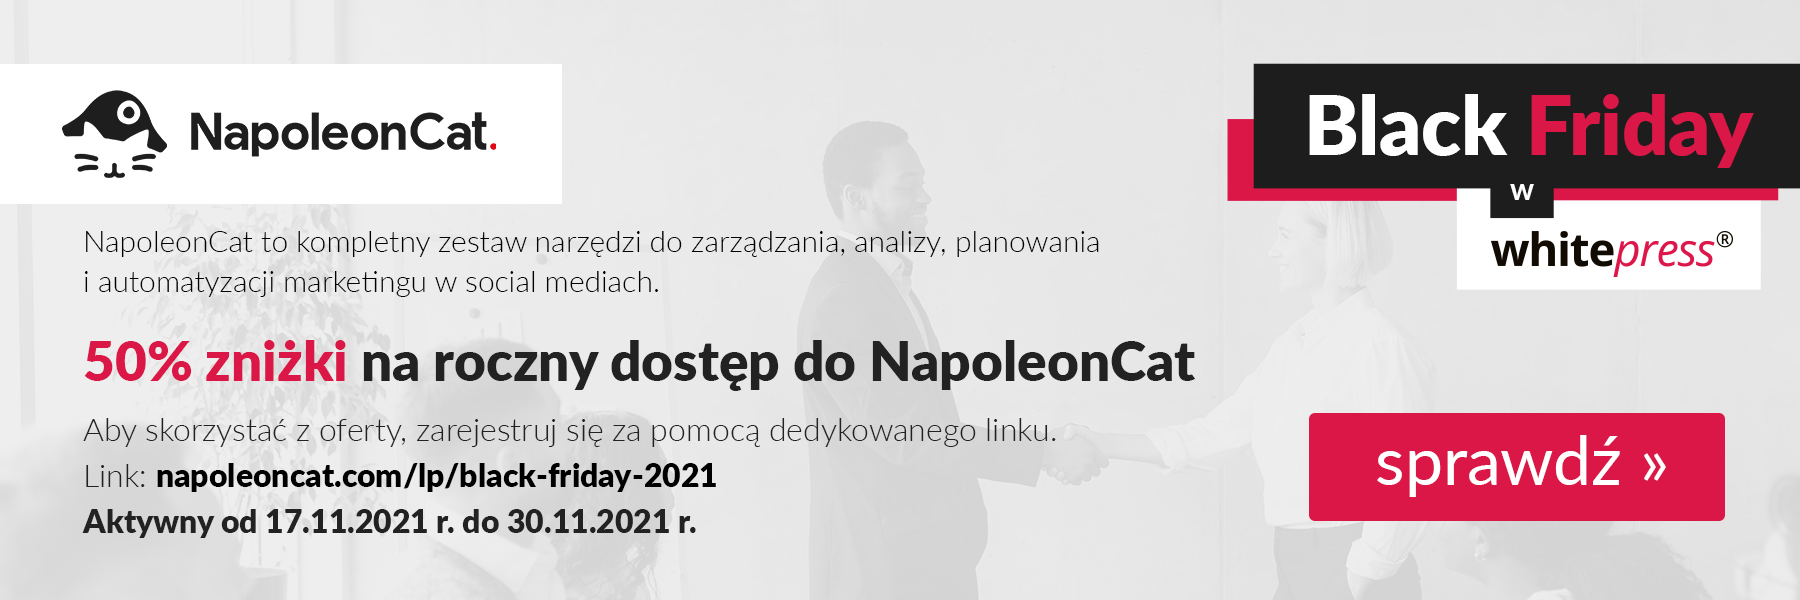 NapoleonCat promocja